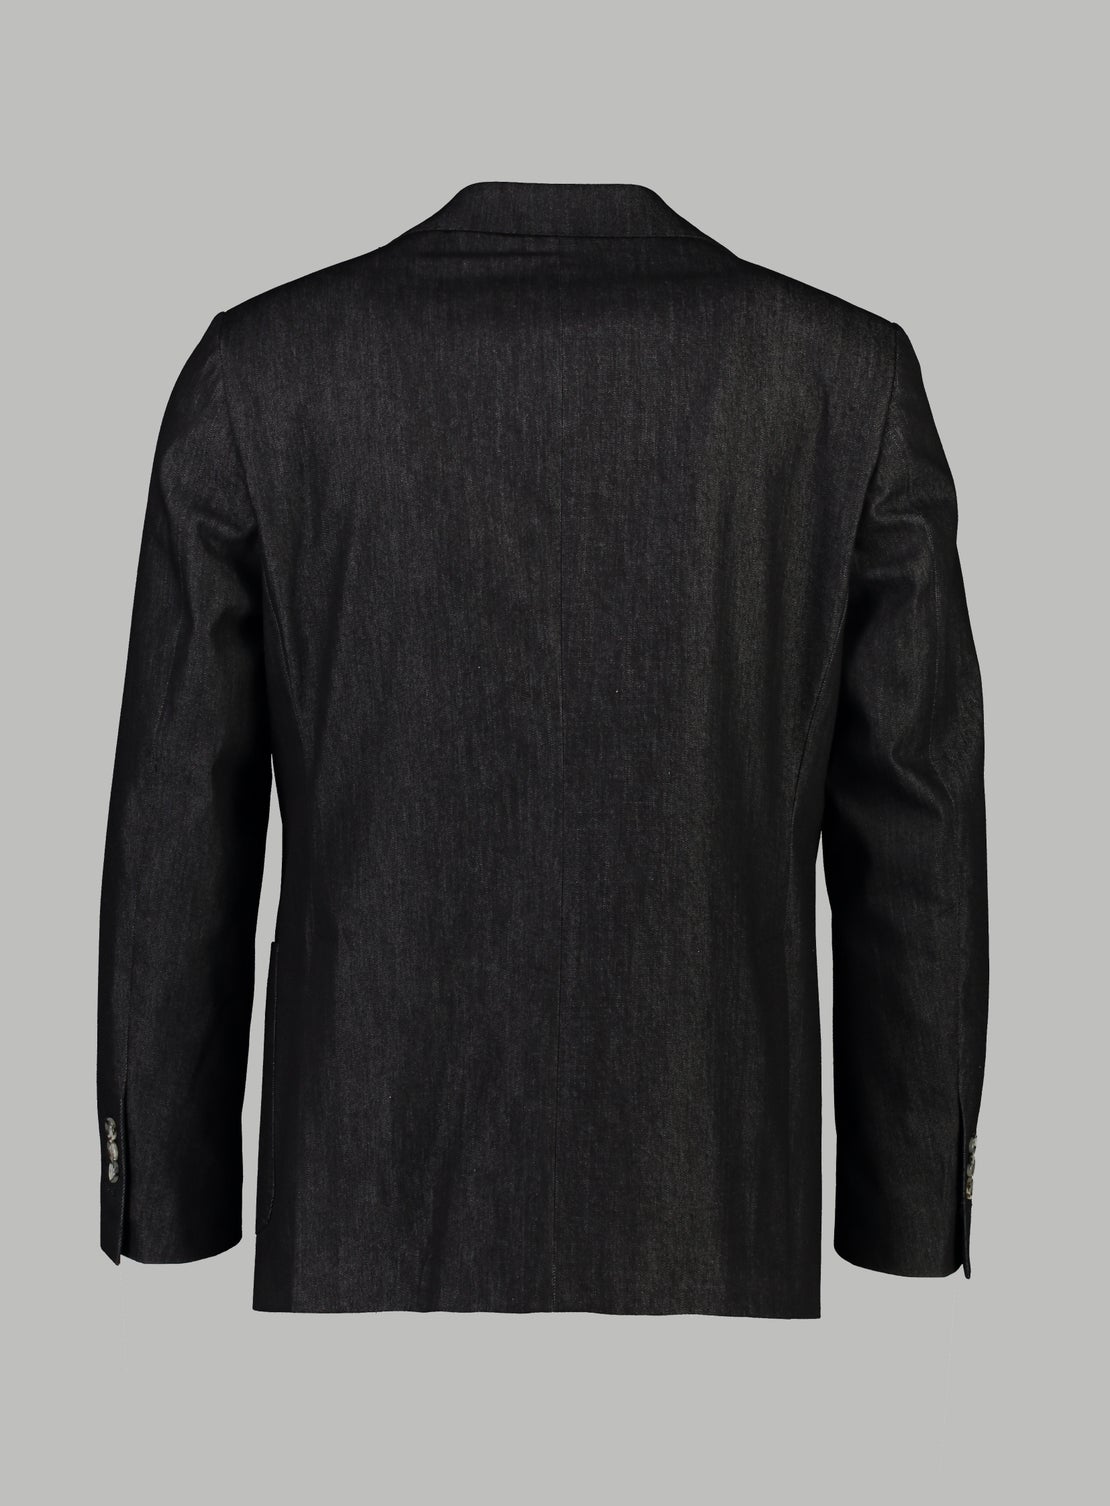 Black Twill Cotton Separates Jacket